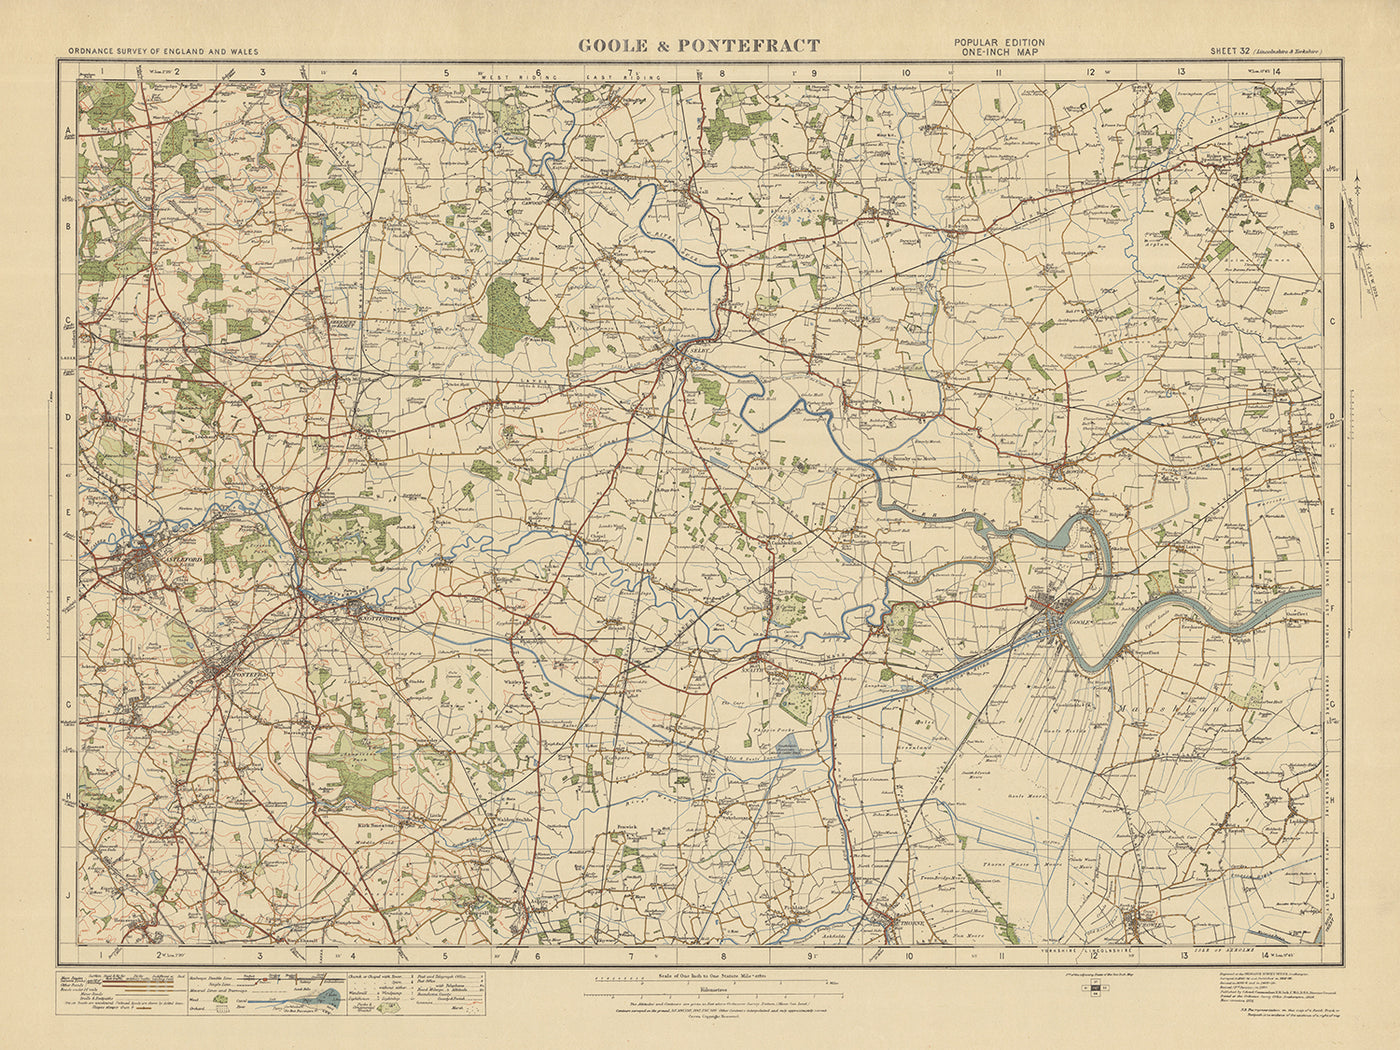 Alte Ordnance Survey Karte, Blatt 32 - Goole & Pontefract, 1925: Castleford, Knottingley, Selby, Howden, Snaith